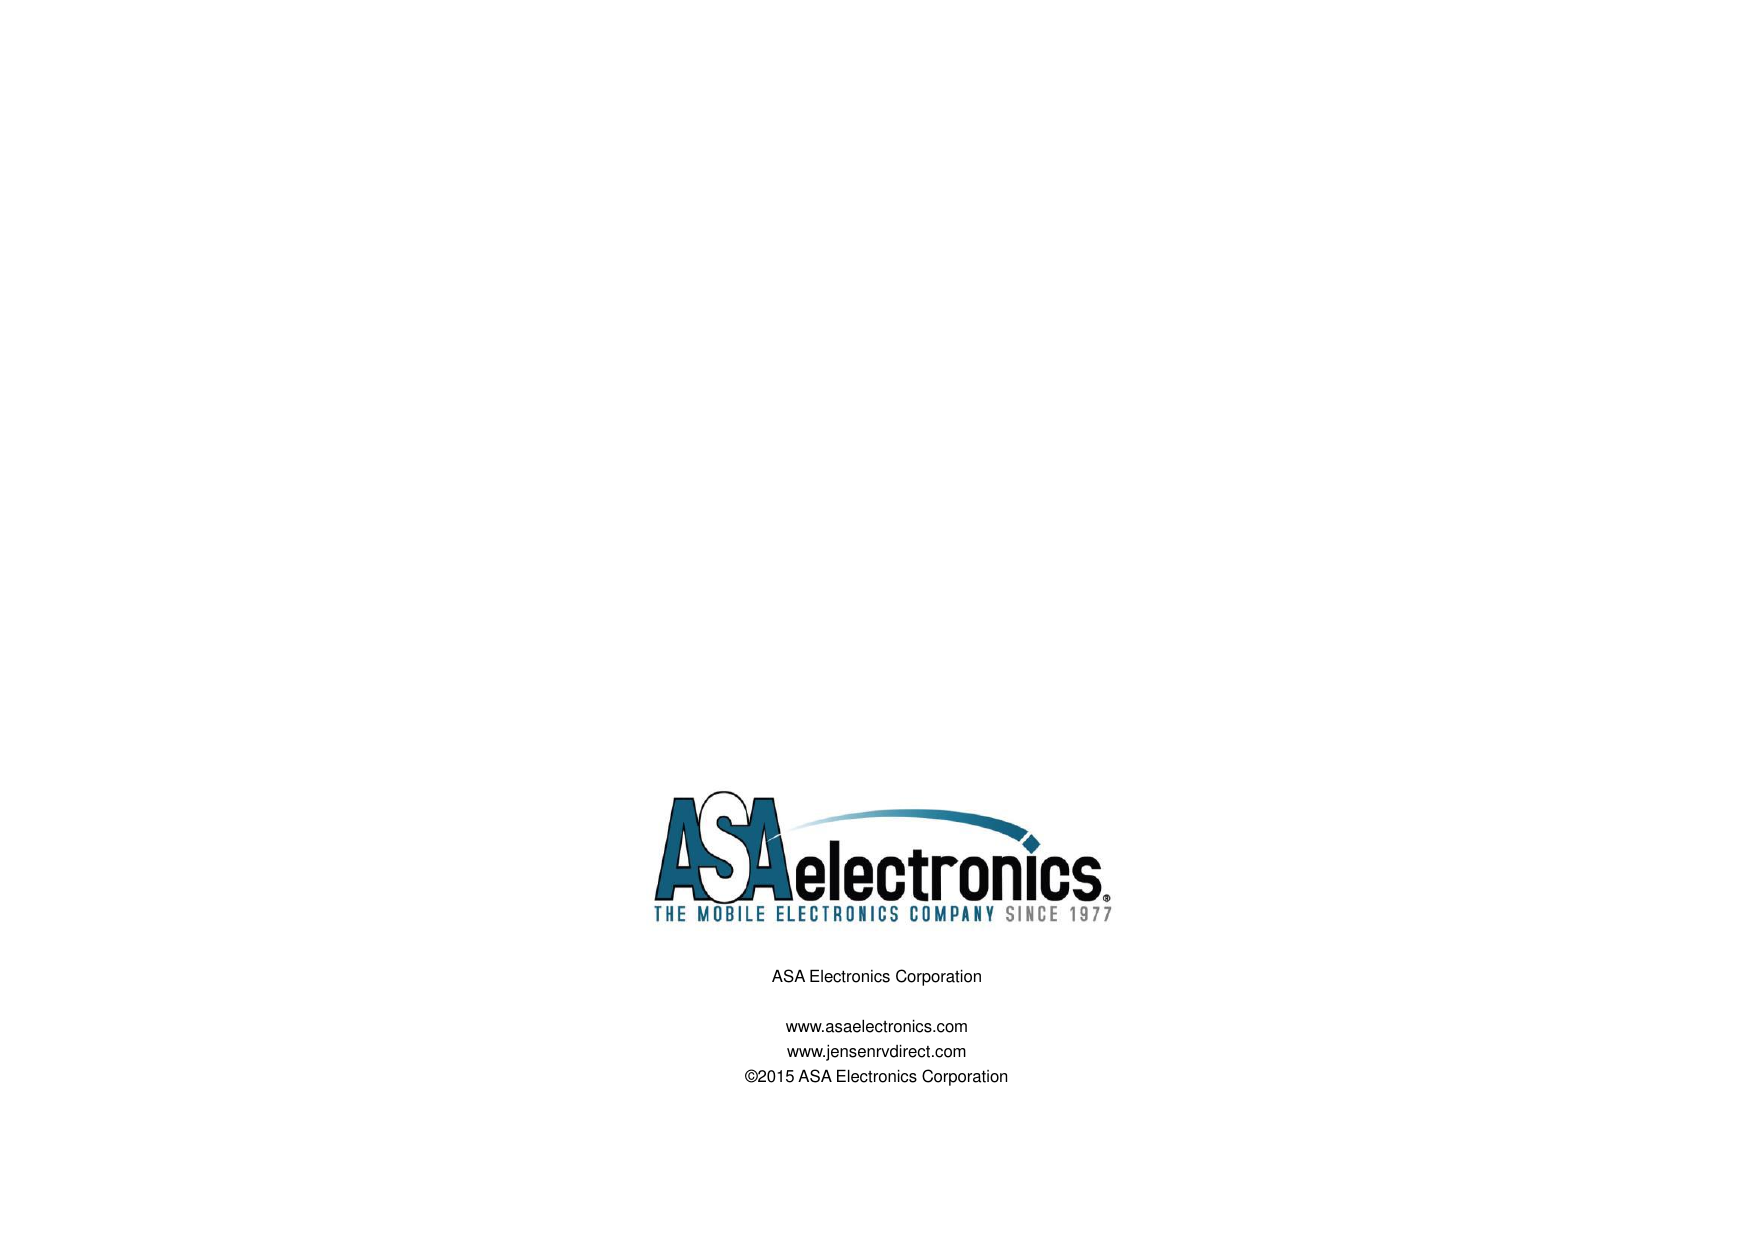                                    ASA Electronics Corporation  www.asaelectronics.com www.jensenrvdirect.com ©2015 ASA Electronics Corporation 